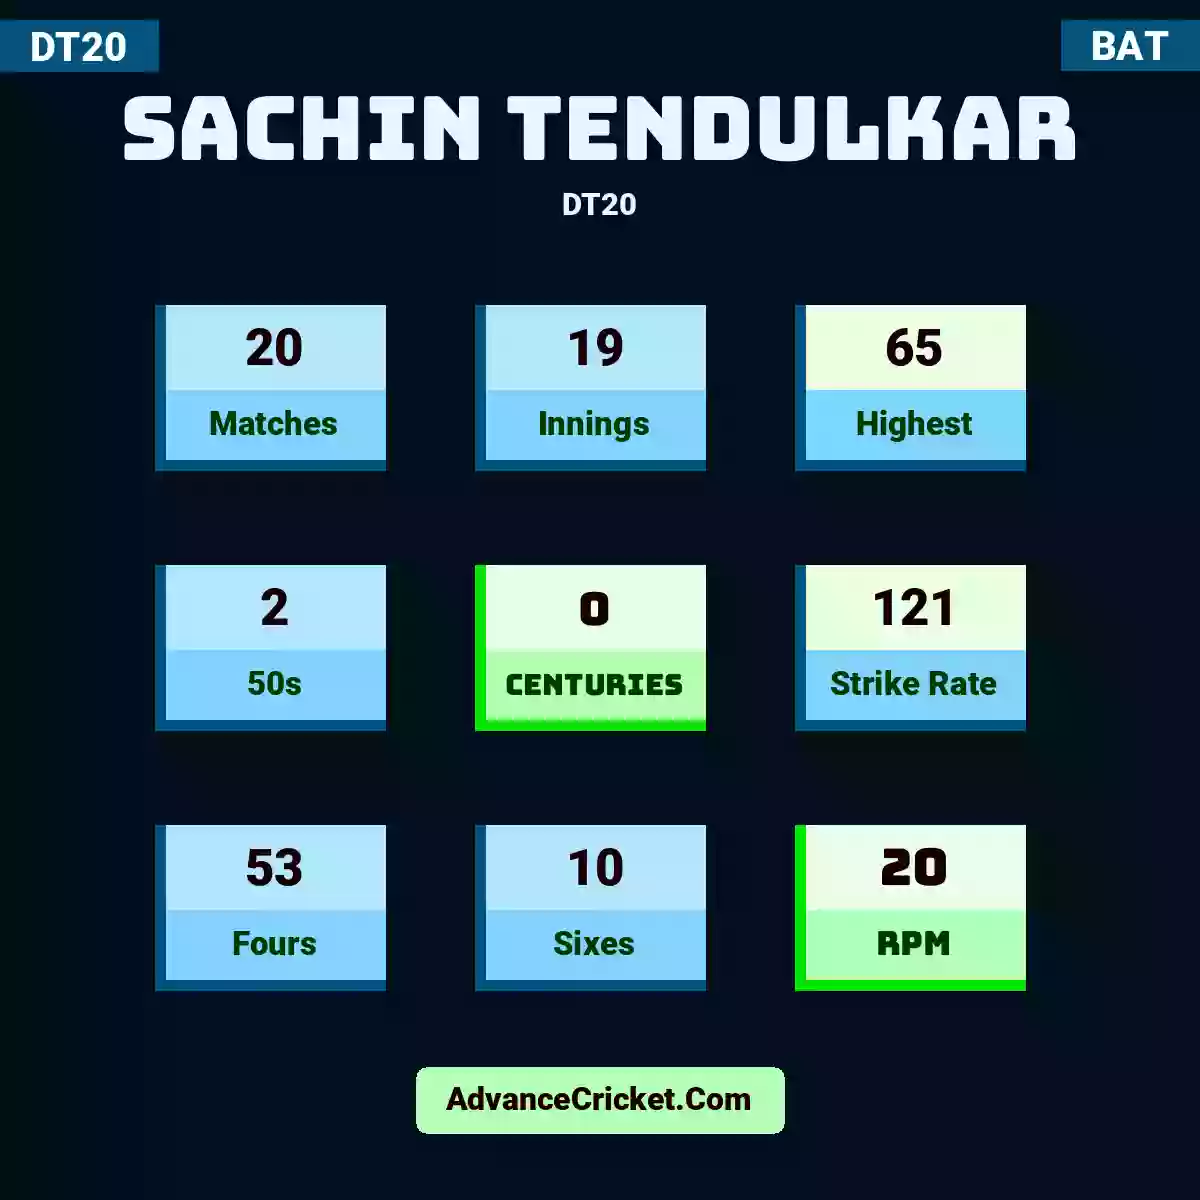 Sachin Tendulkar DT20 , Sachin Tendulkar played 20 matches, scored 65 runs as highest, 2 half-centuries, and 0 centuries, with a strike rate of 121. S.Tendulkar hit 53 fours and 10 sixes, with an RPM of 20.